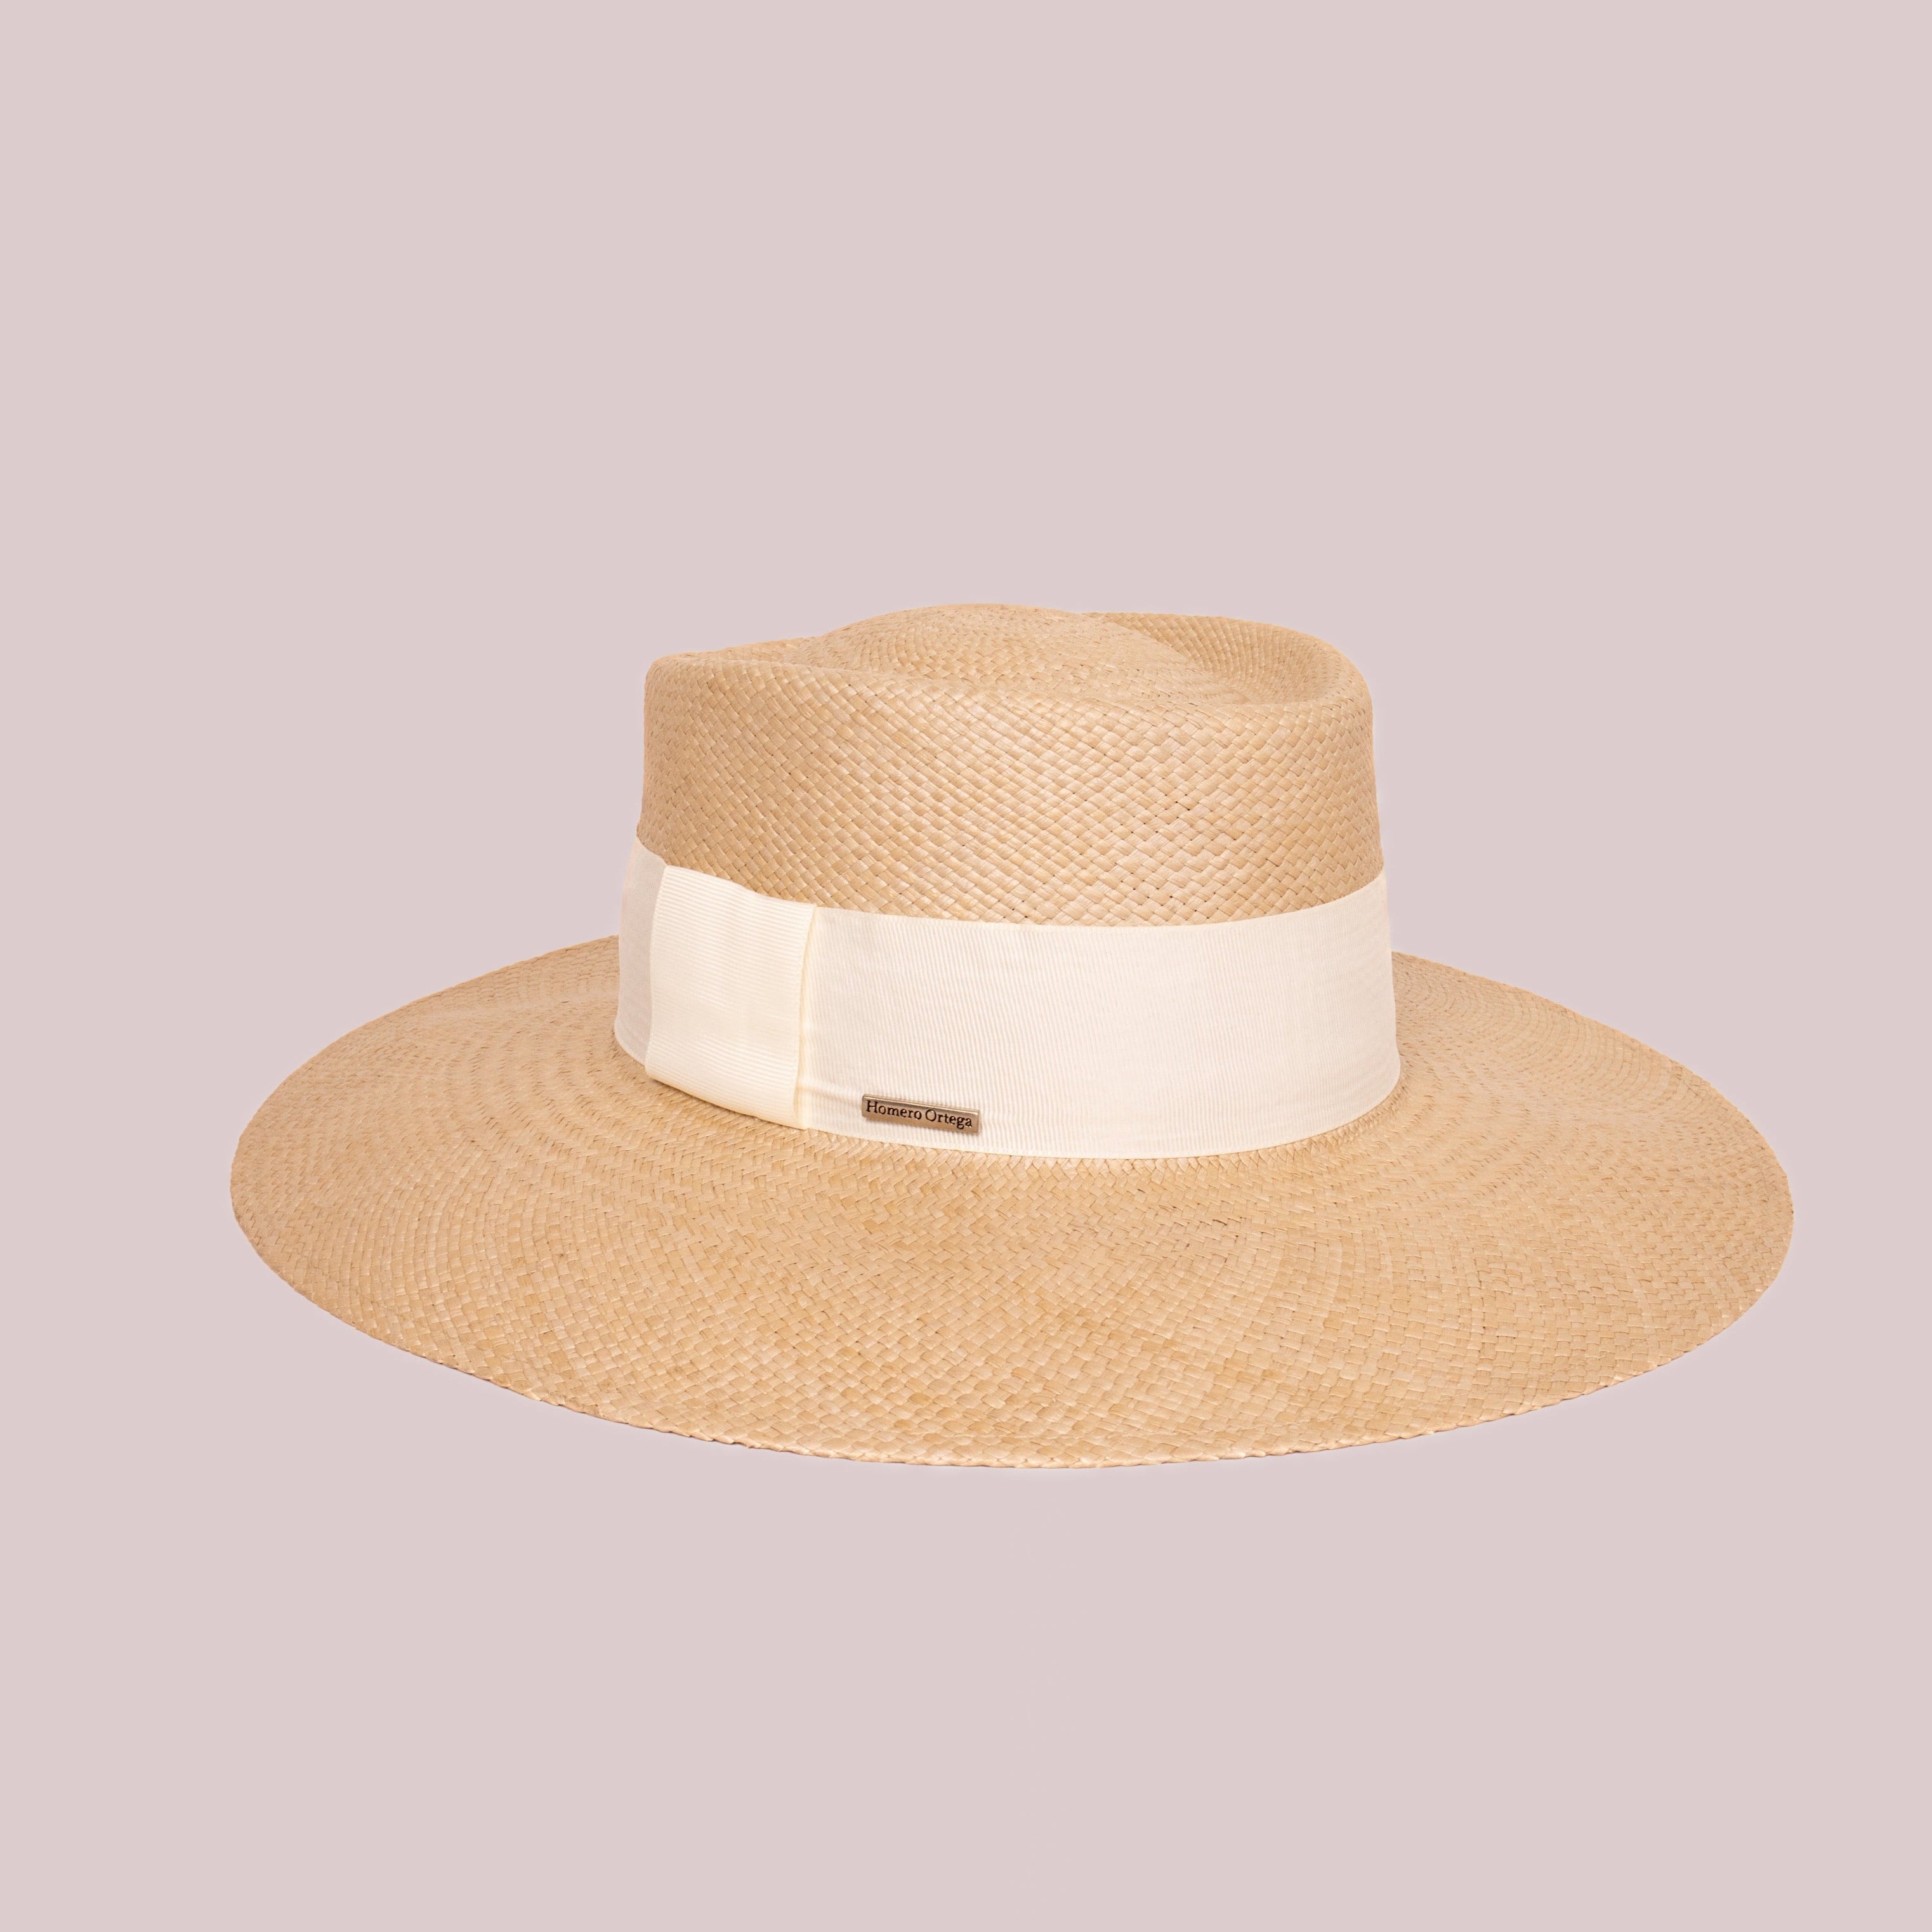 stylish summer hats for women australia